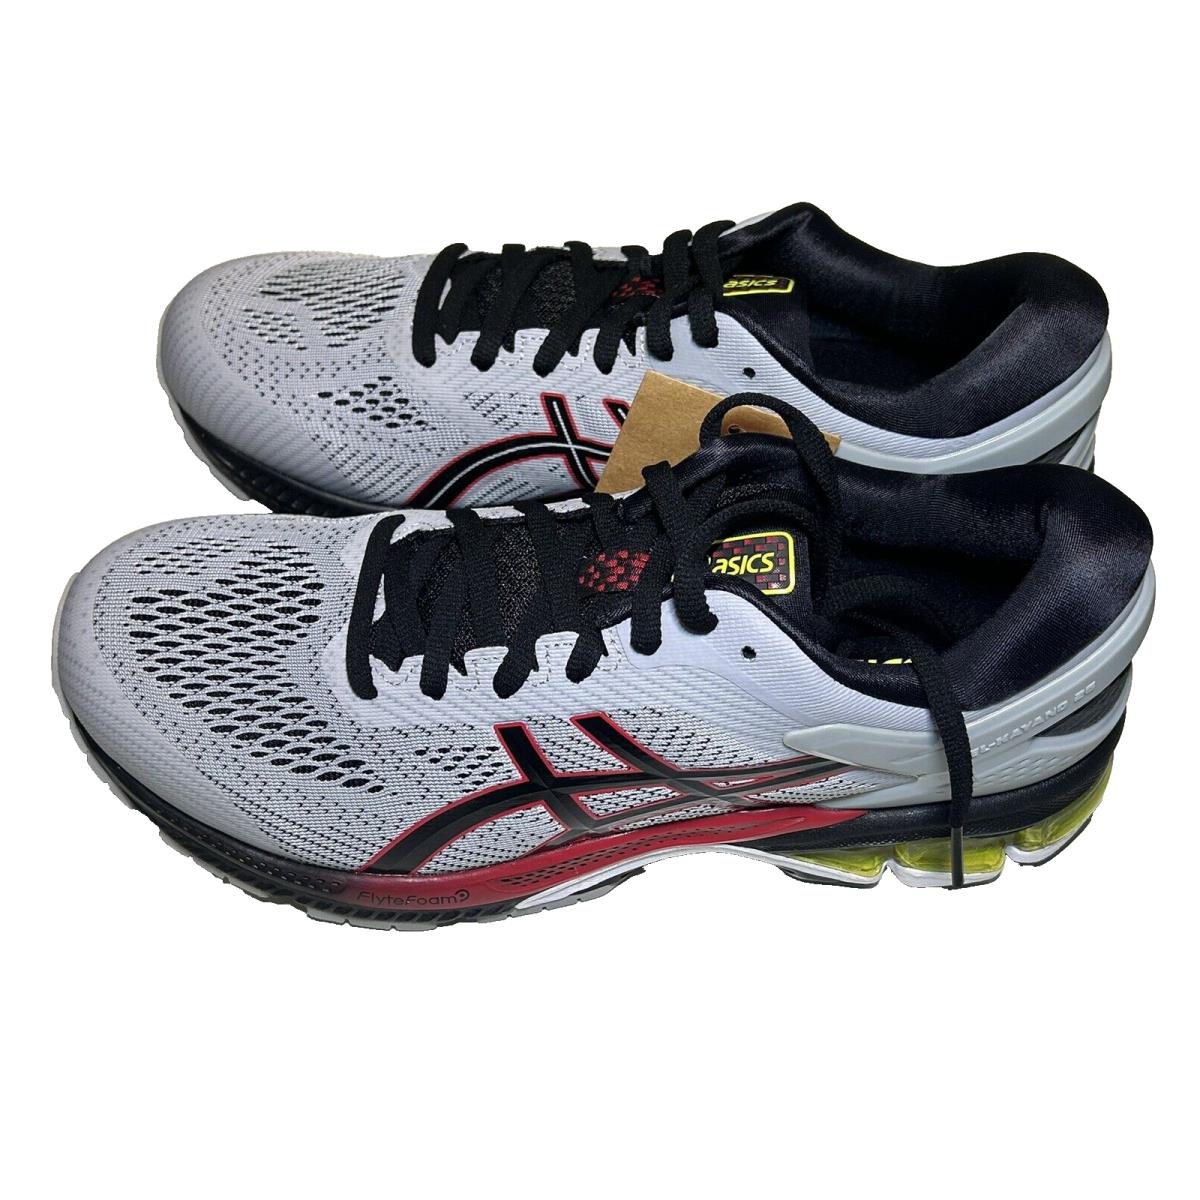 Asics Mens Size 9 Gel-kayano 26 Running Shoes Piedmont Grey/black Track Sneakers